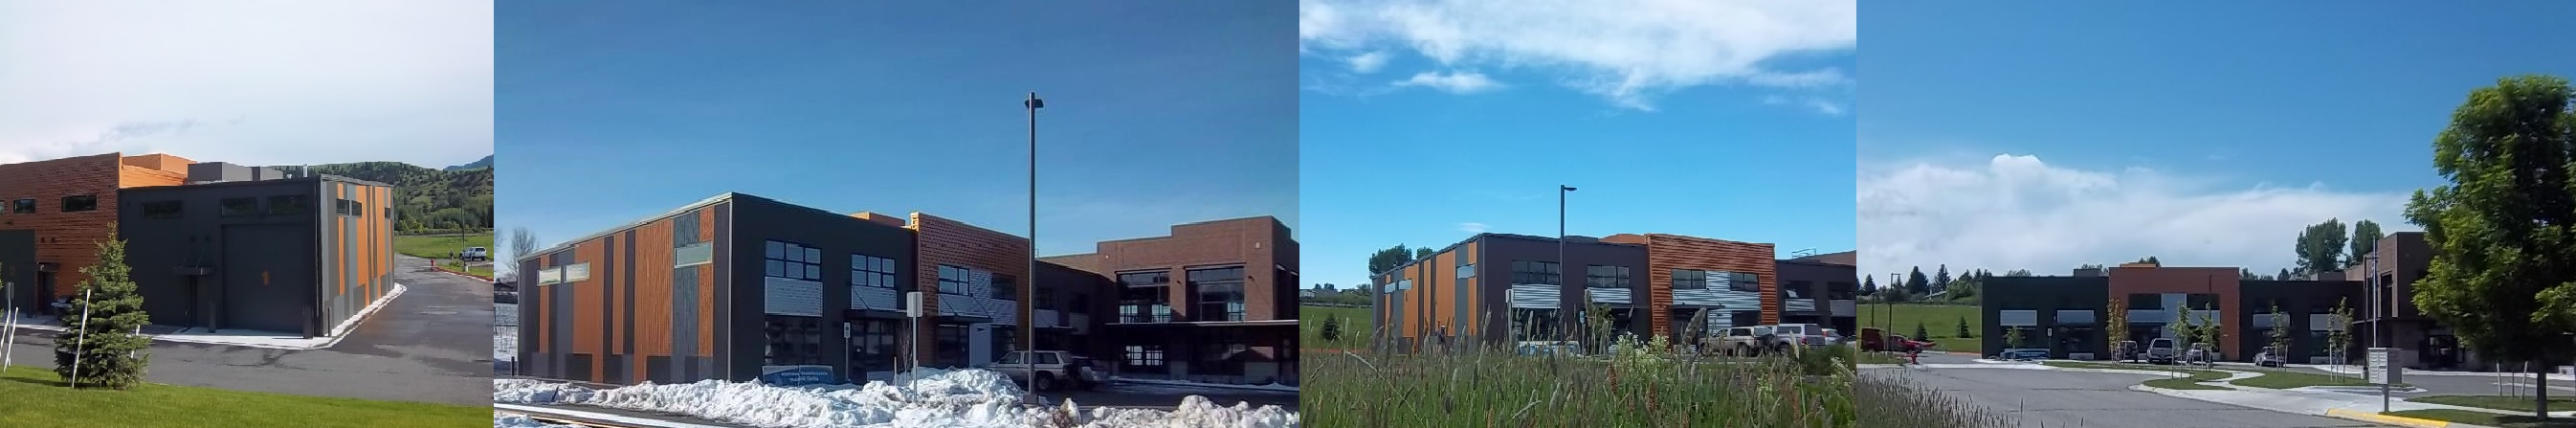 Four photos of the Weatherization Training Center